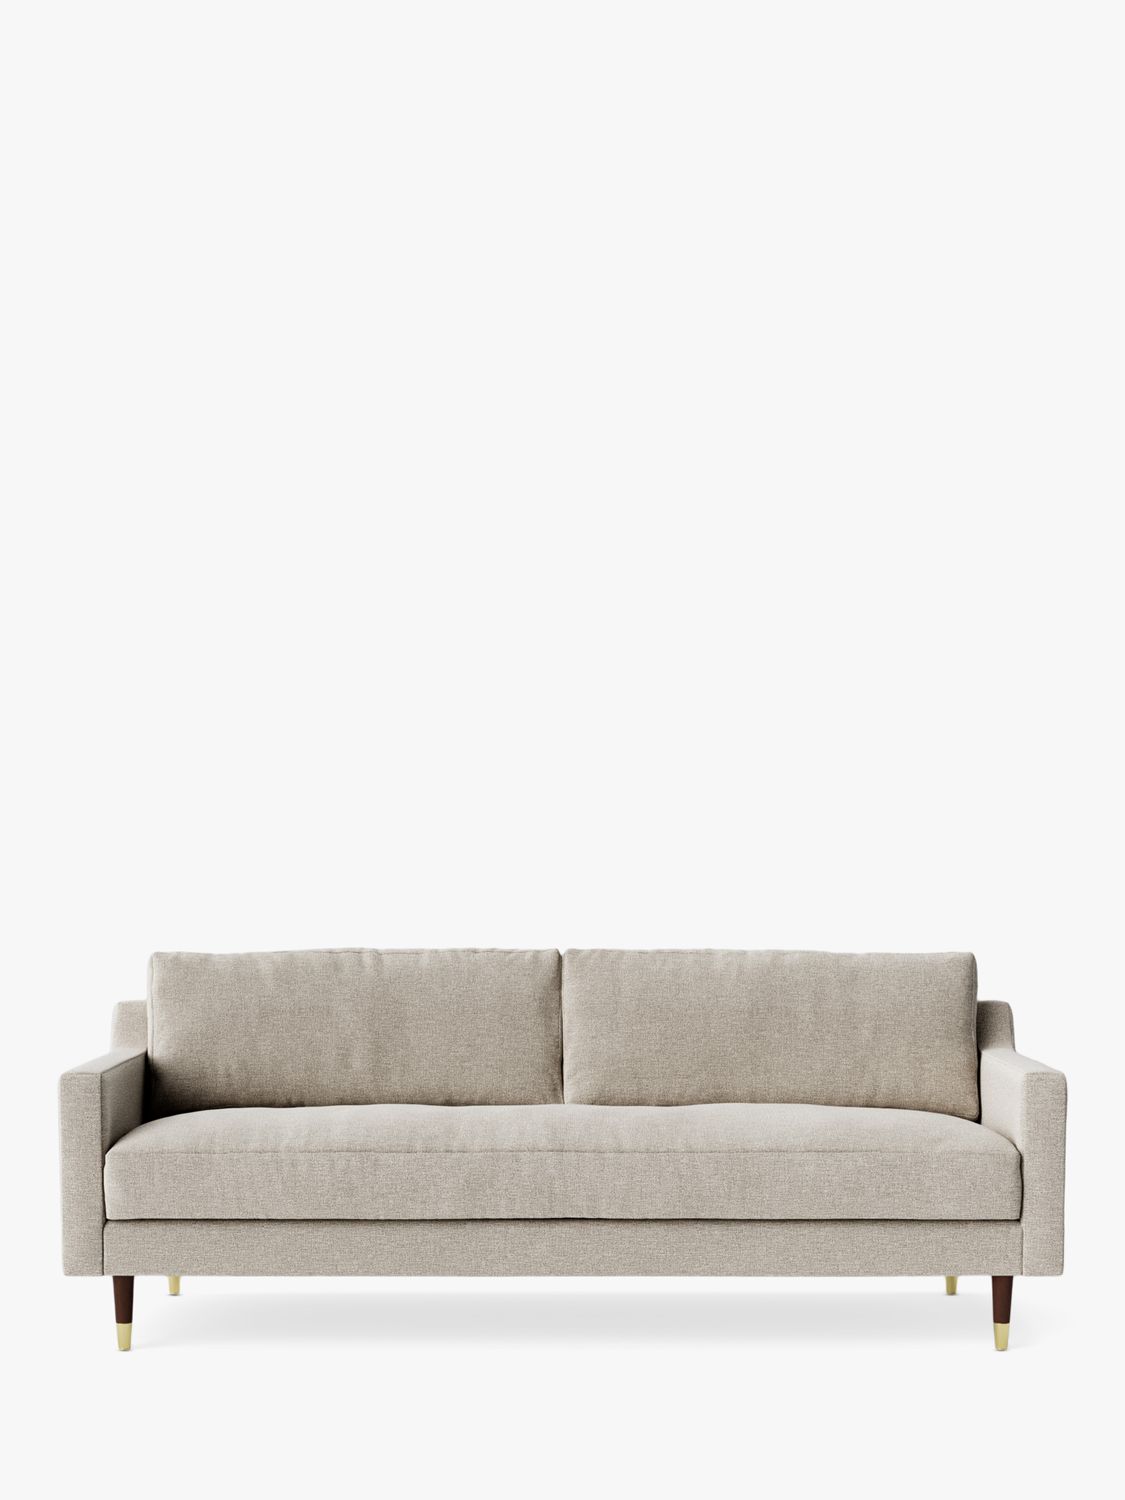 Swoon Rieti Large 3 Seater Sofa